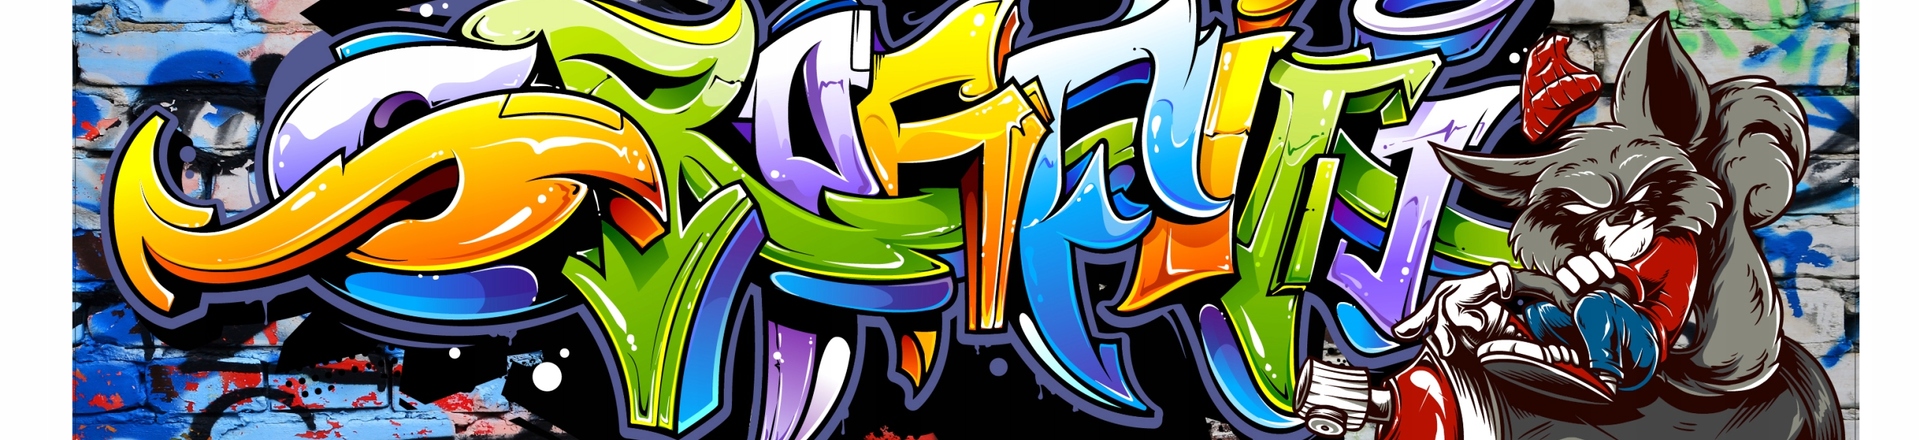 Naklejka na sciane grafiti graffiti mlodziezowe